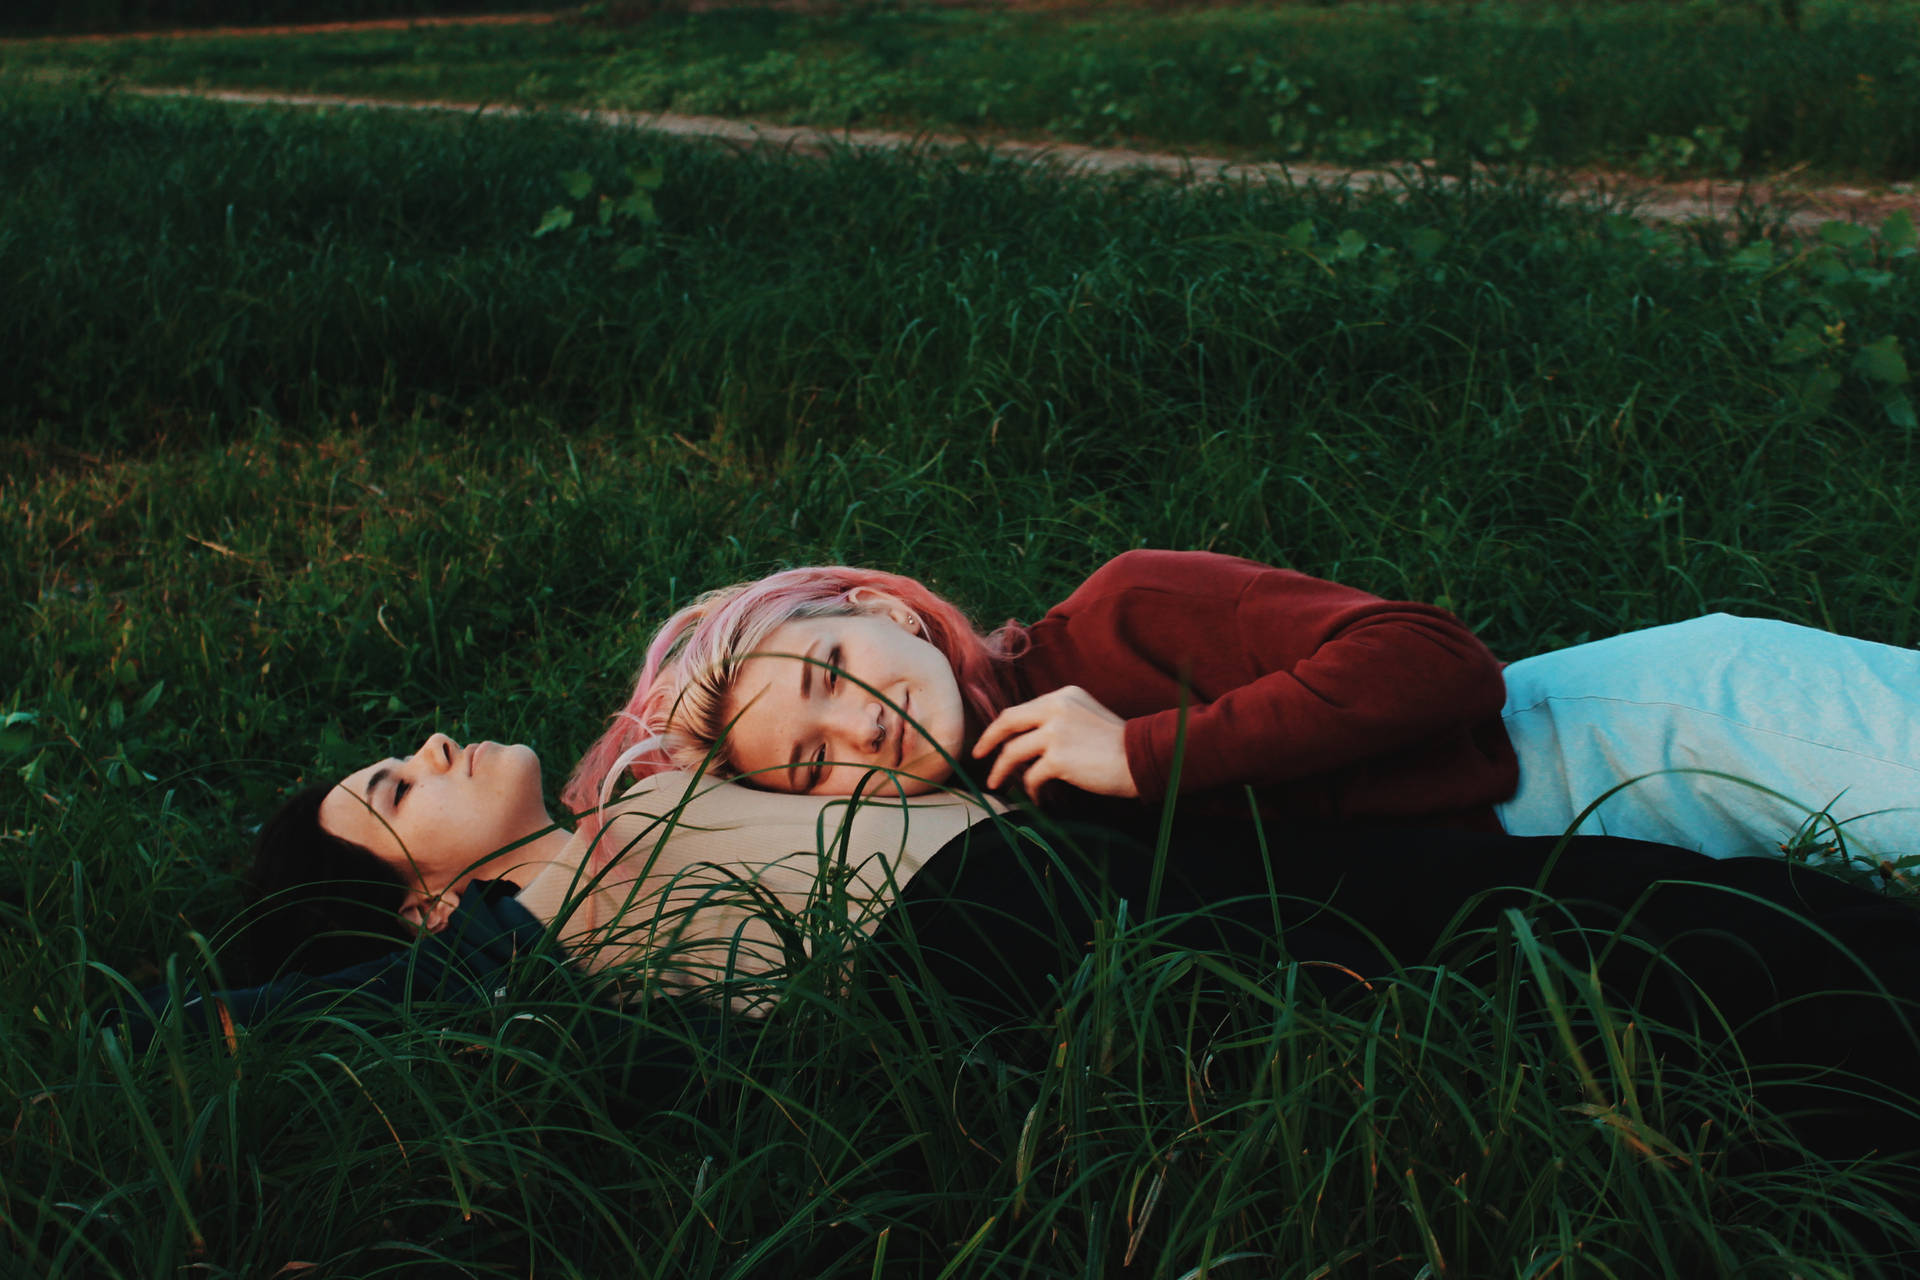 Lesbian Couple On Grass Field